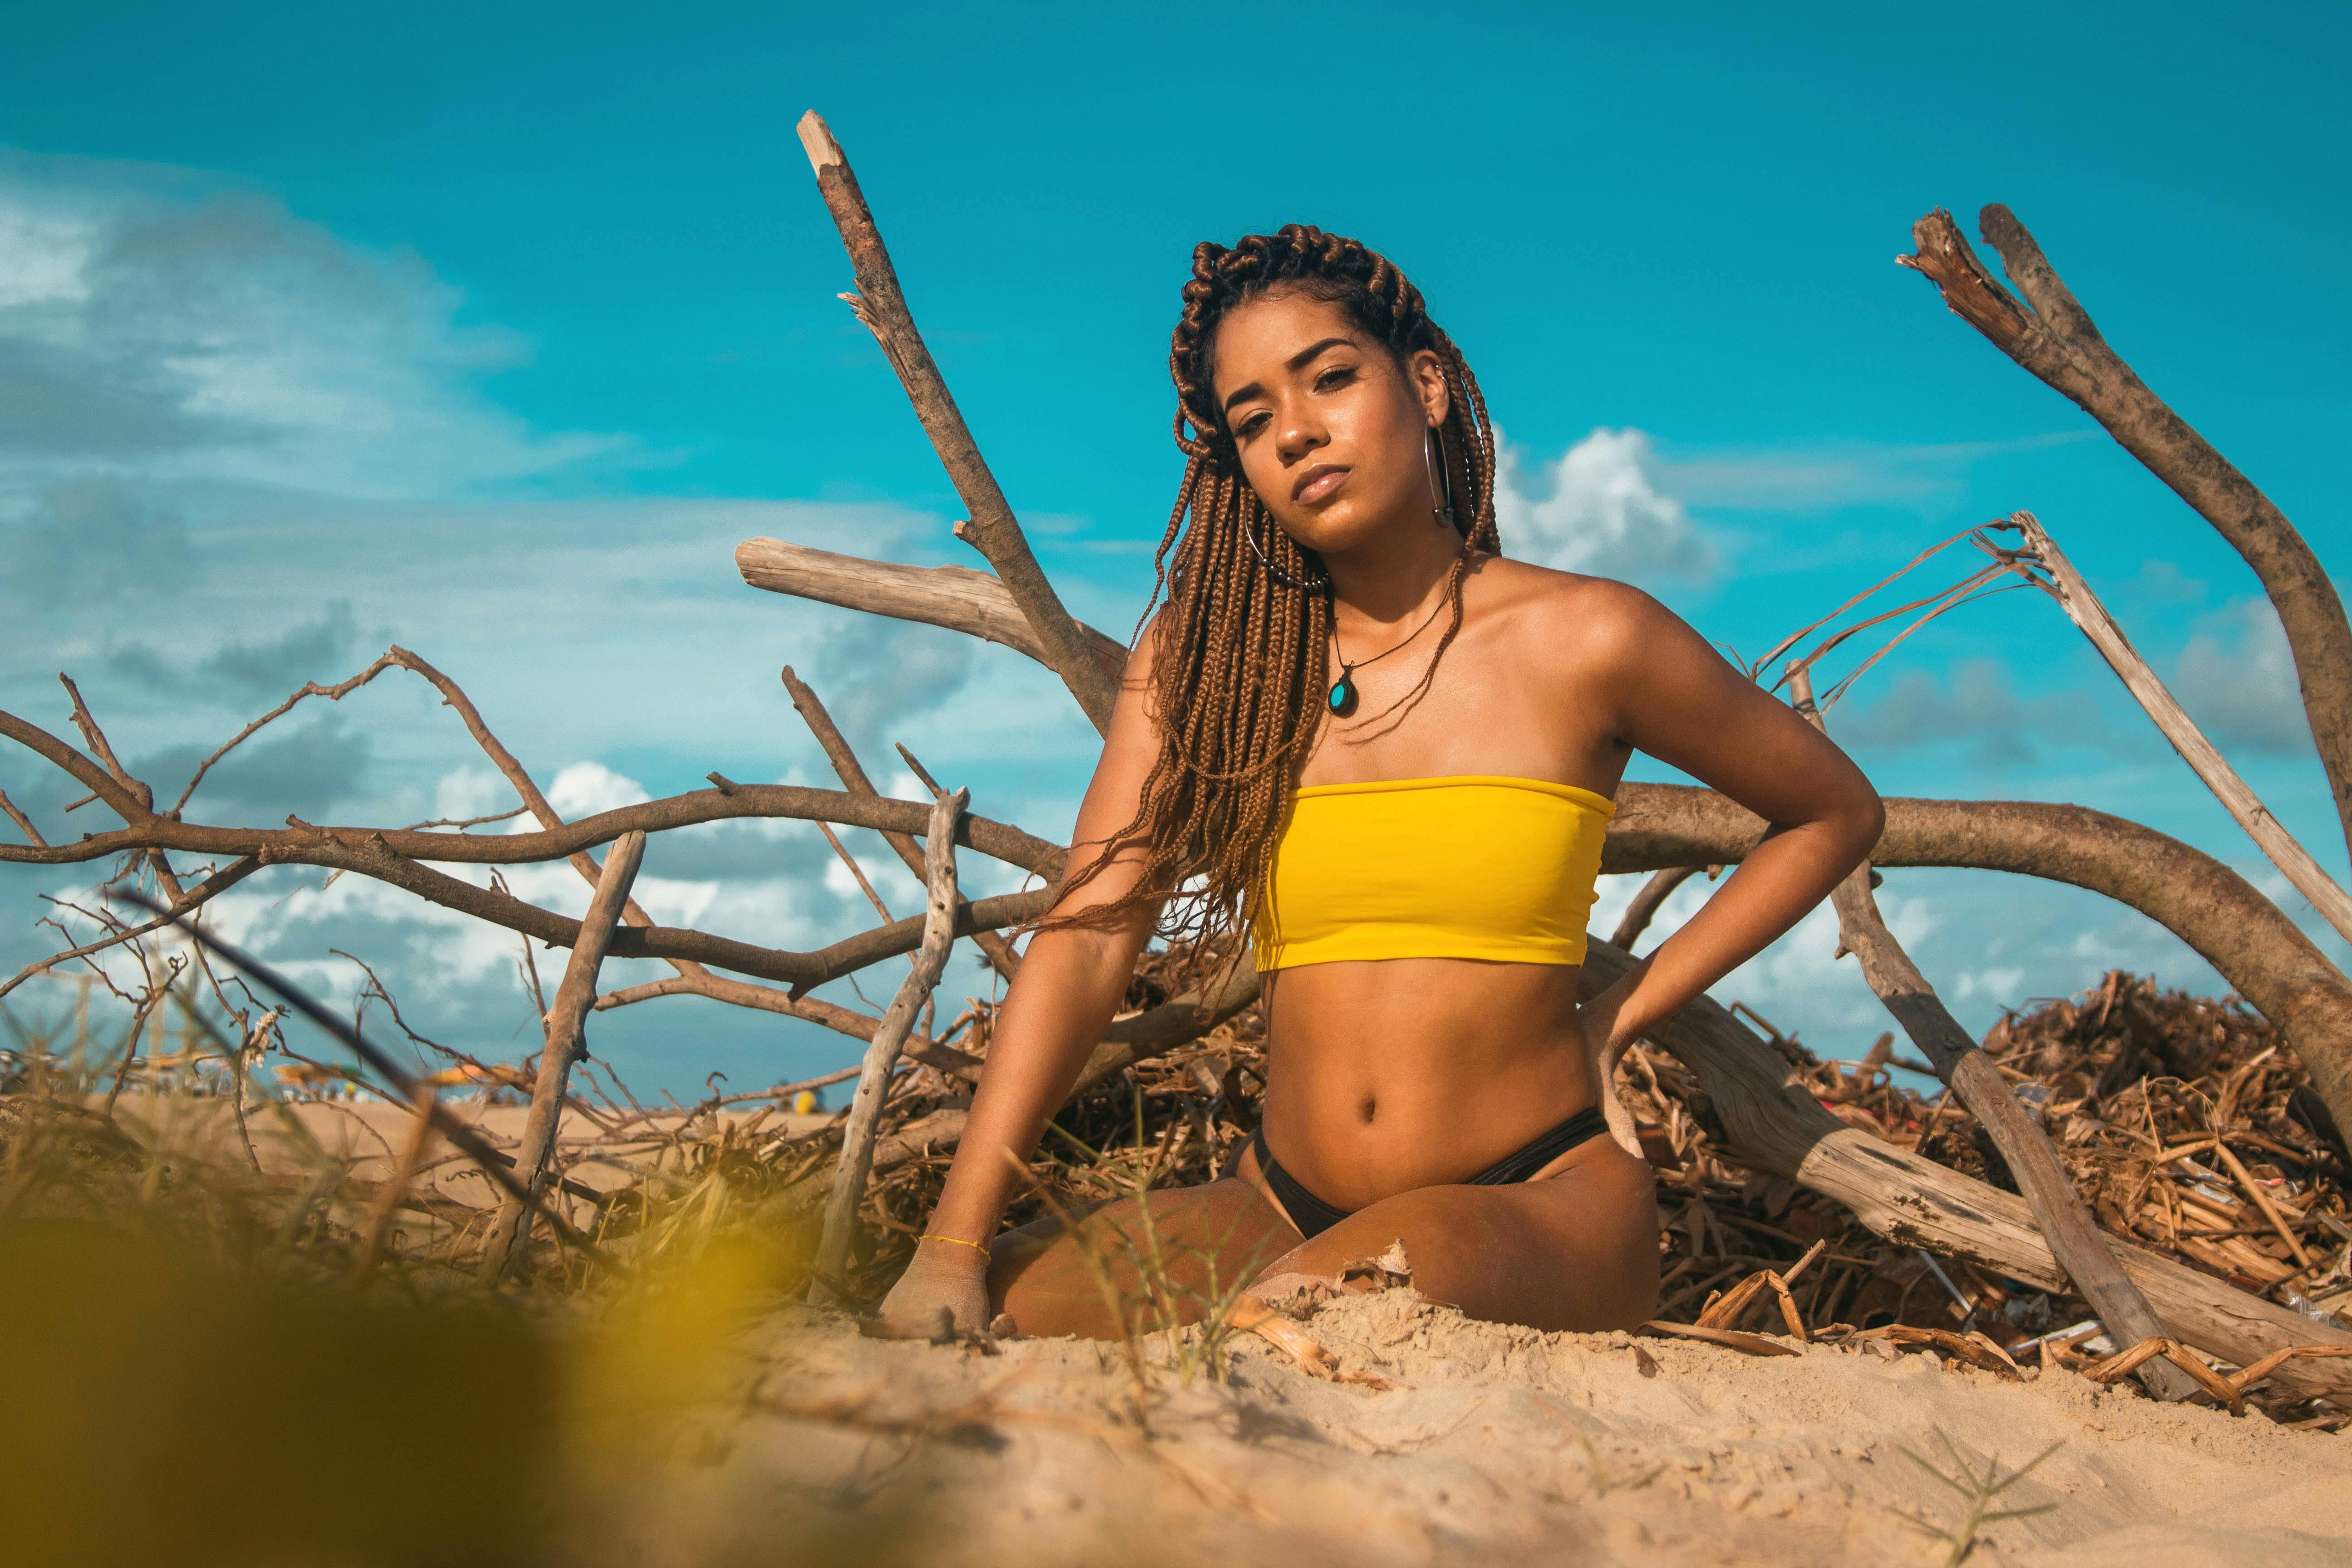 Cool female in bikini on sandy coast · Free Stock Photo